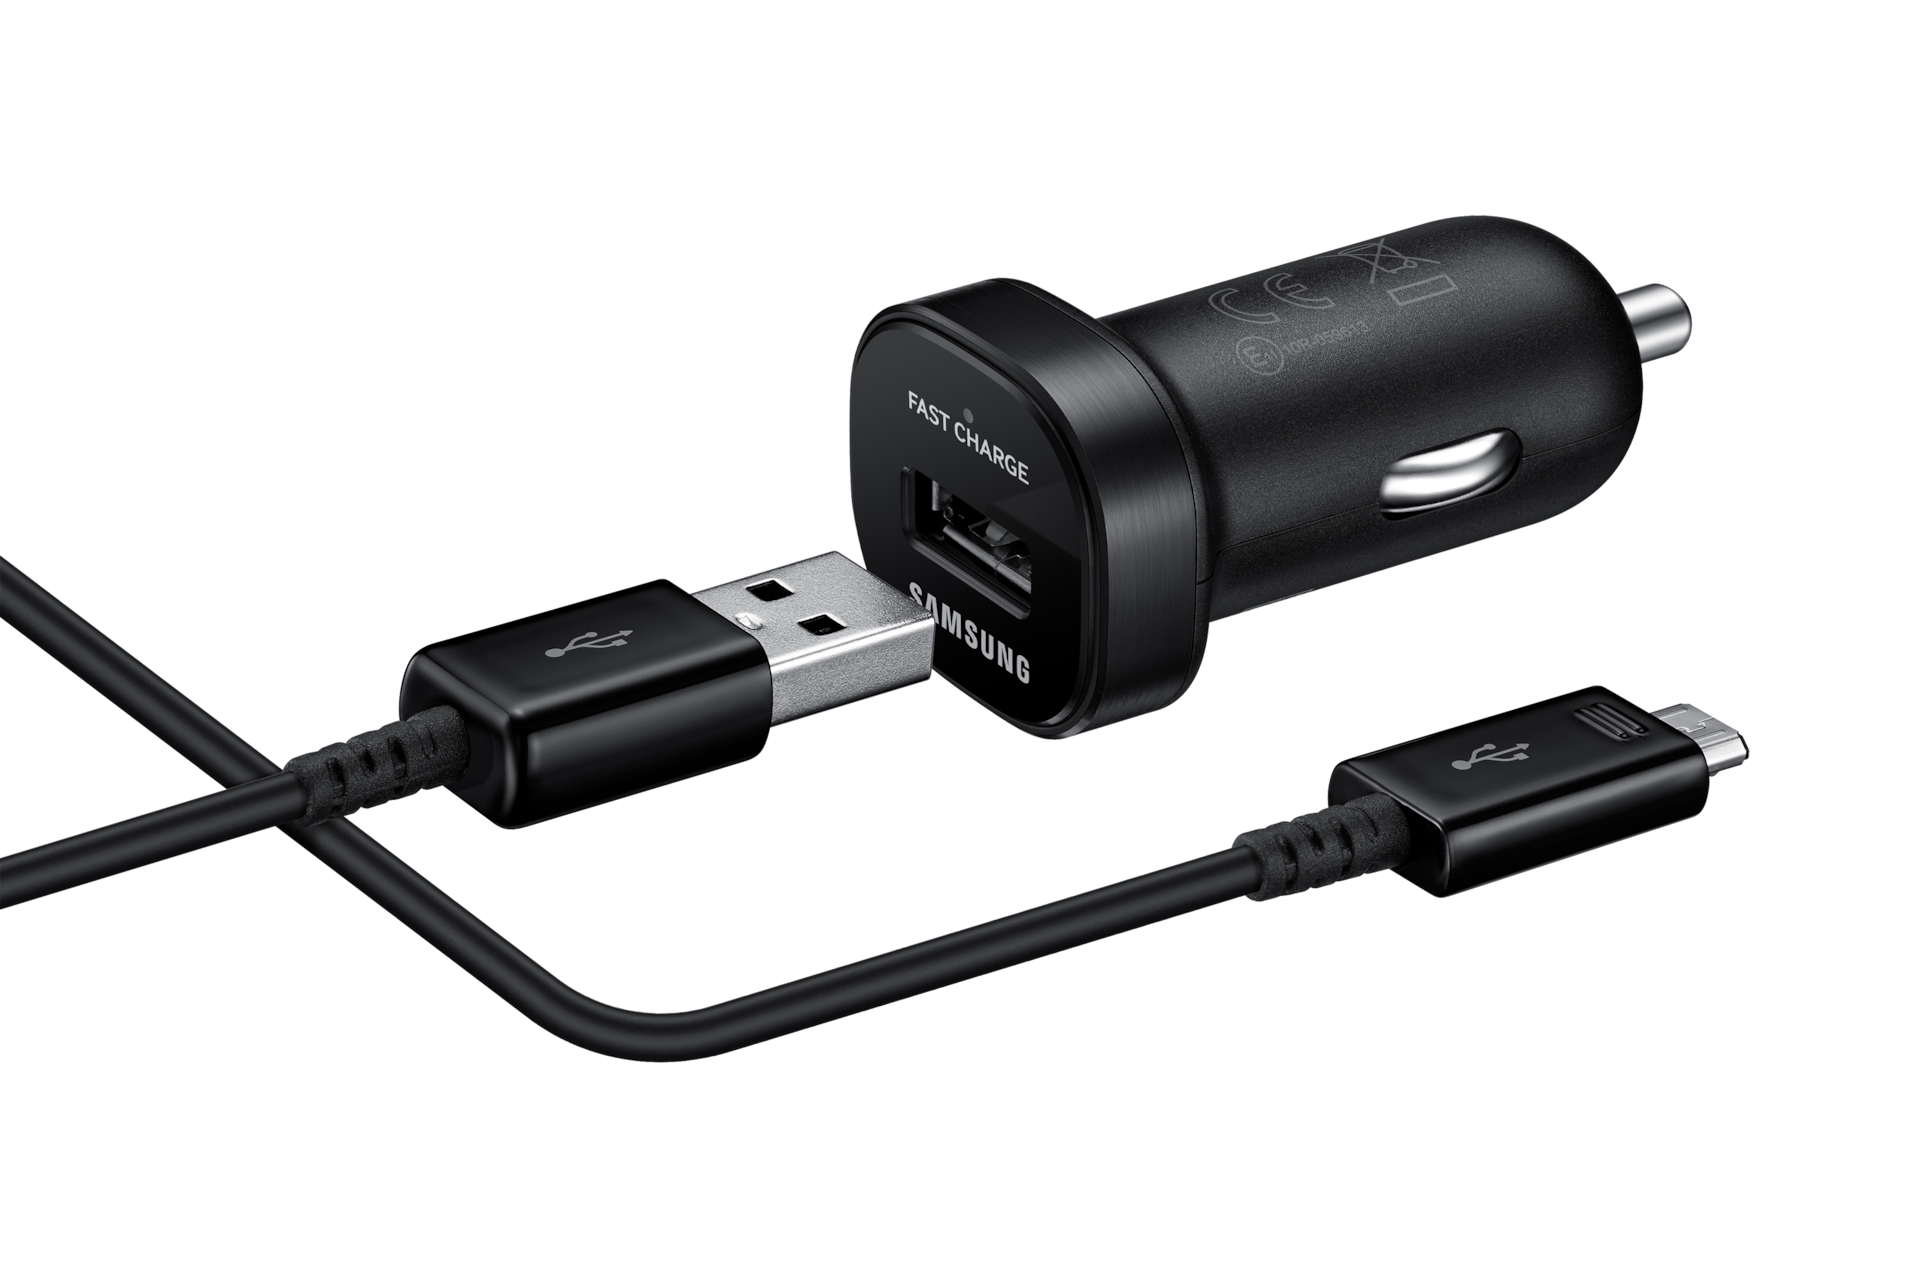 Cable de carga micro USB para carga rapida de 2 m — LST